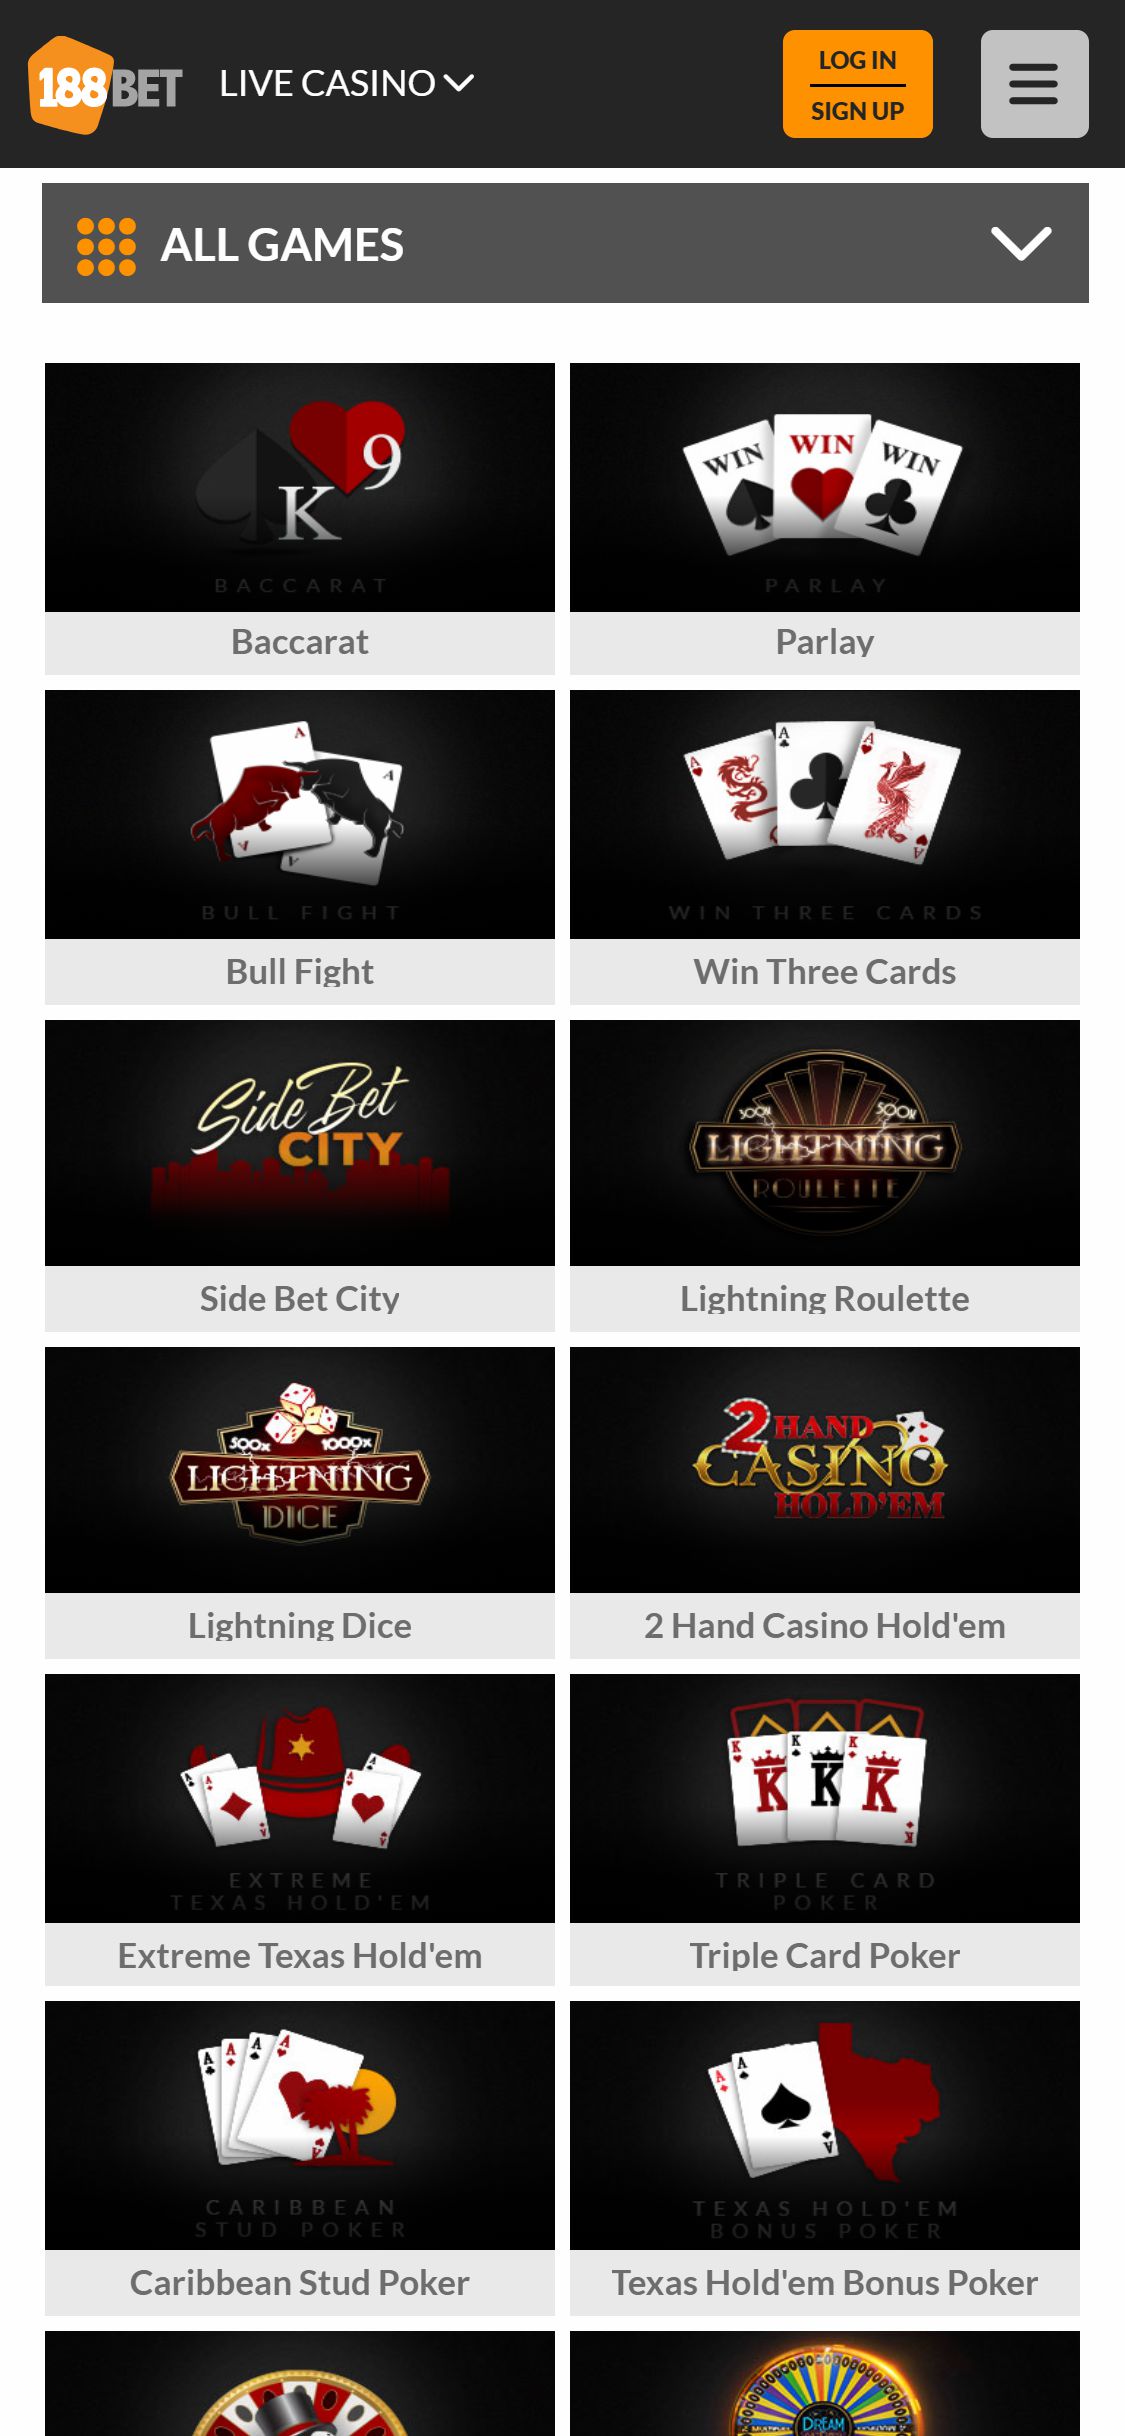 188 Bet Casino Mobile Live Dealer Games Review